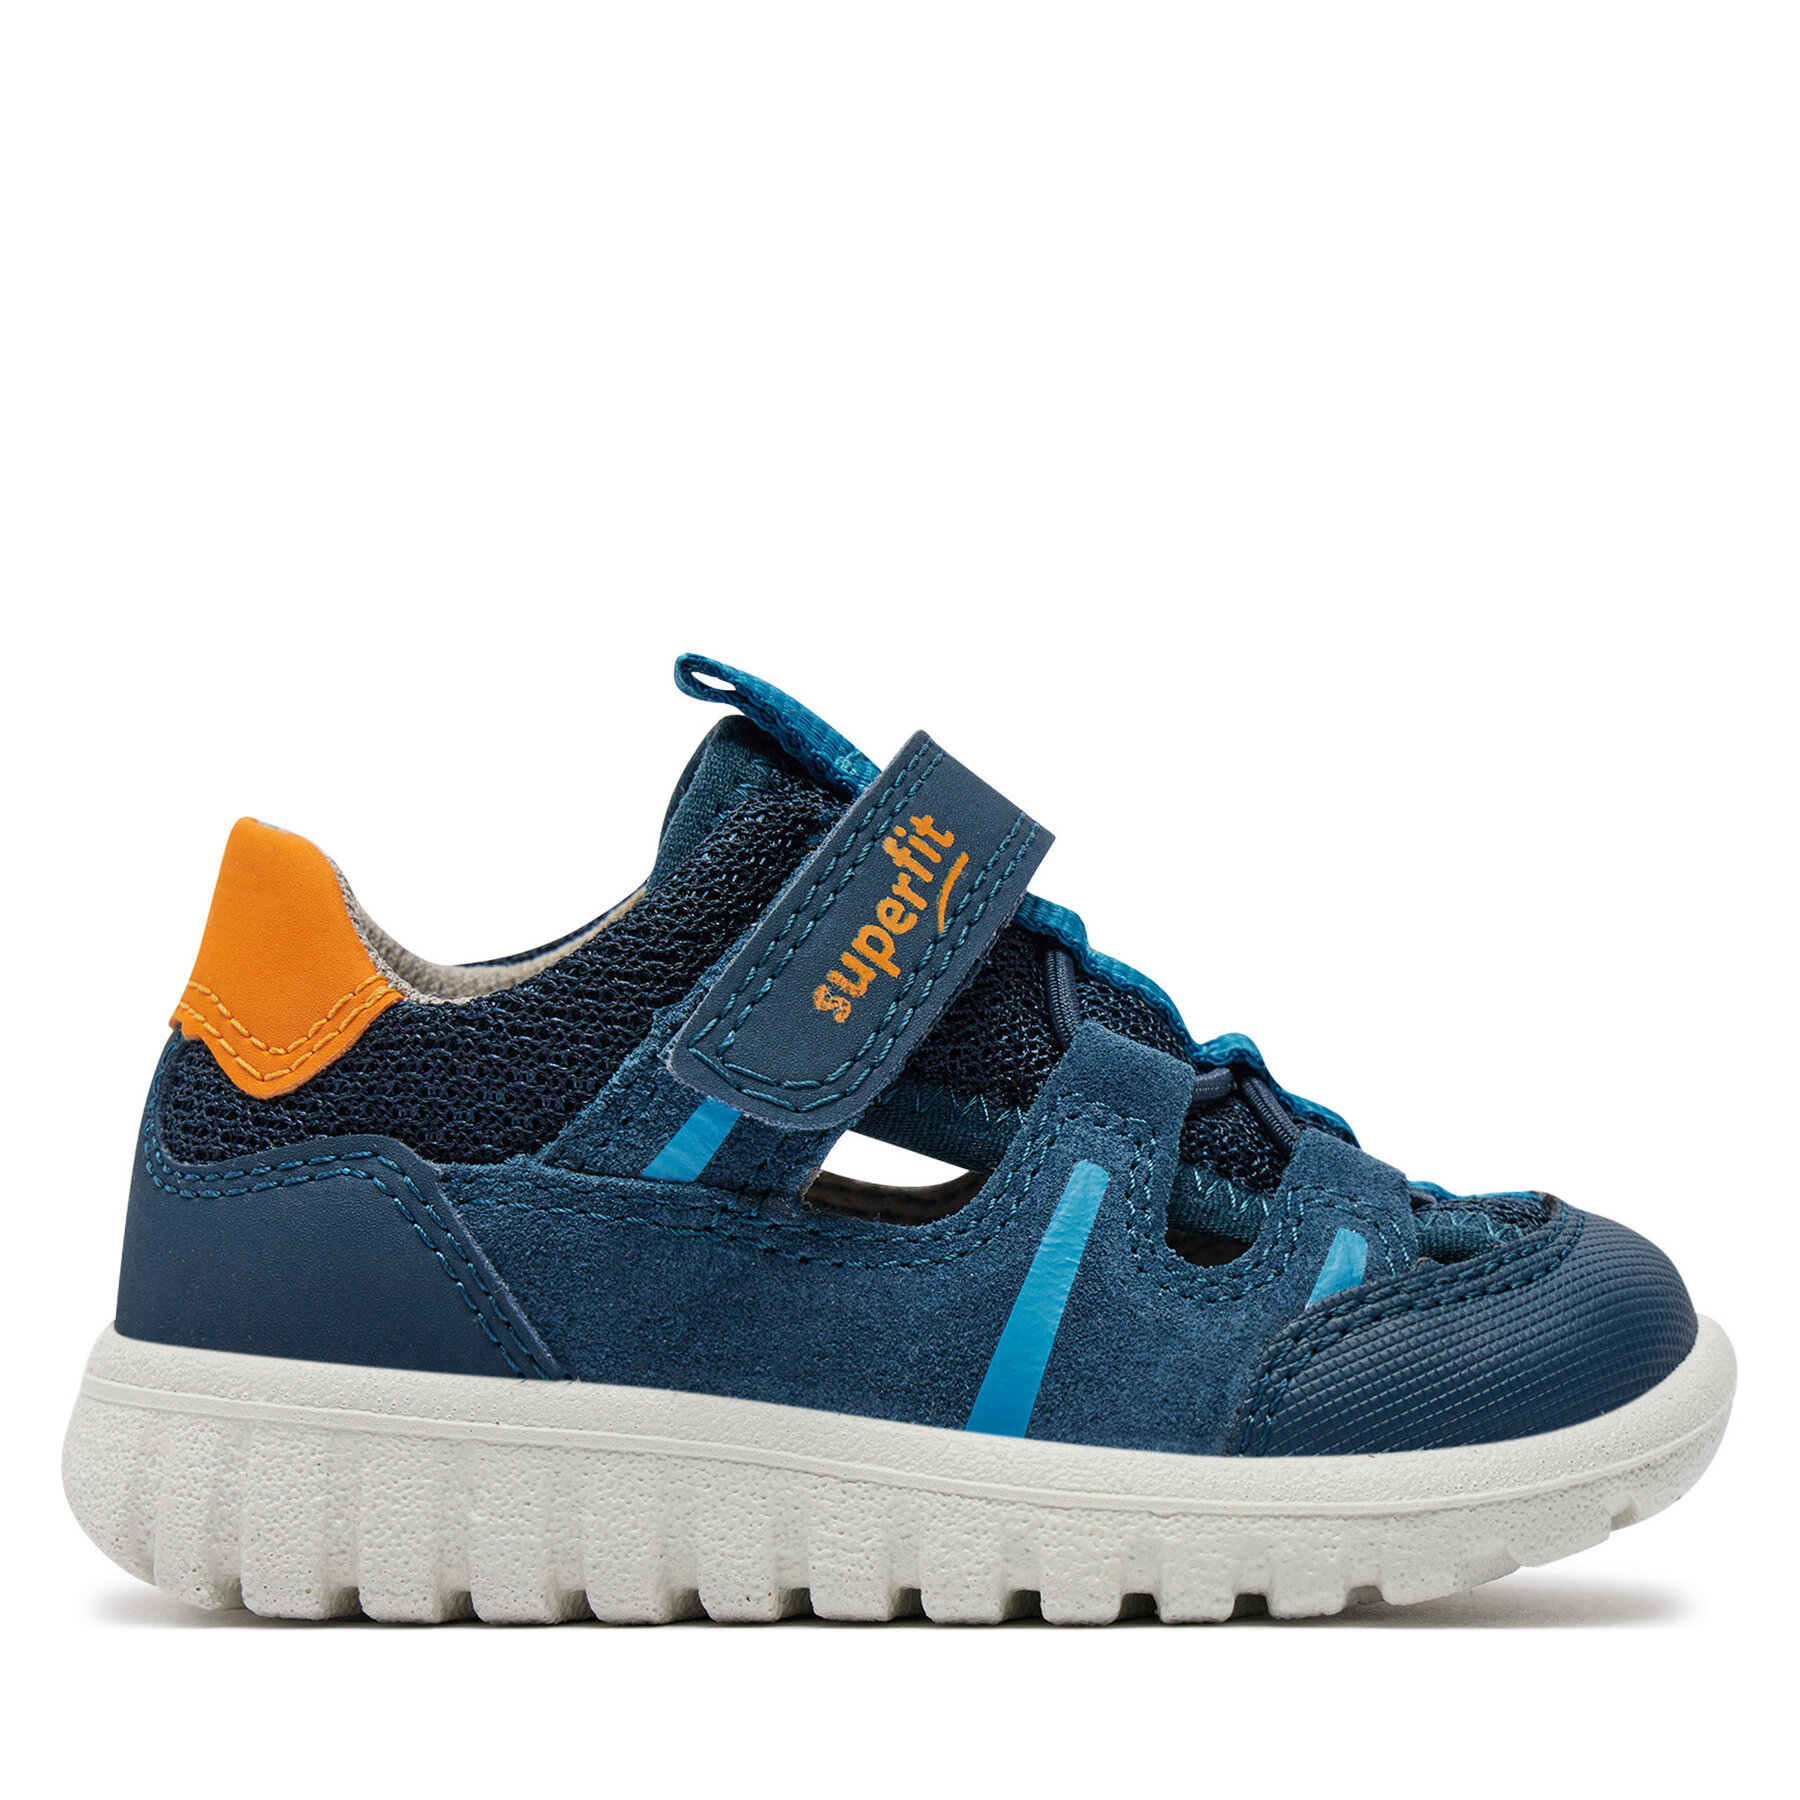 Cipele Superfit 1-006181-8000 M Blue/Orange